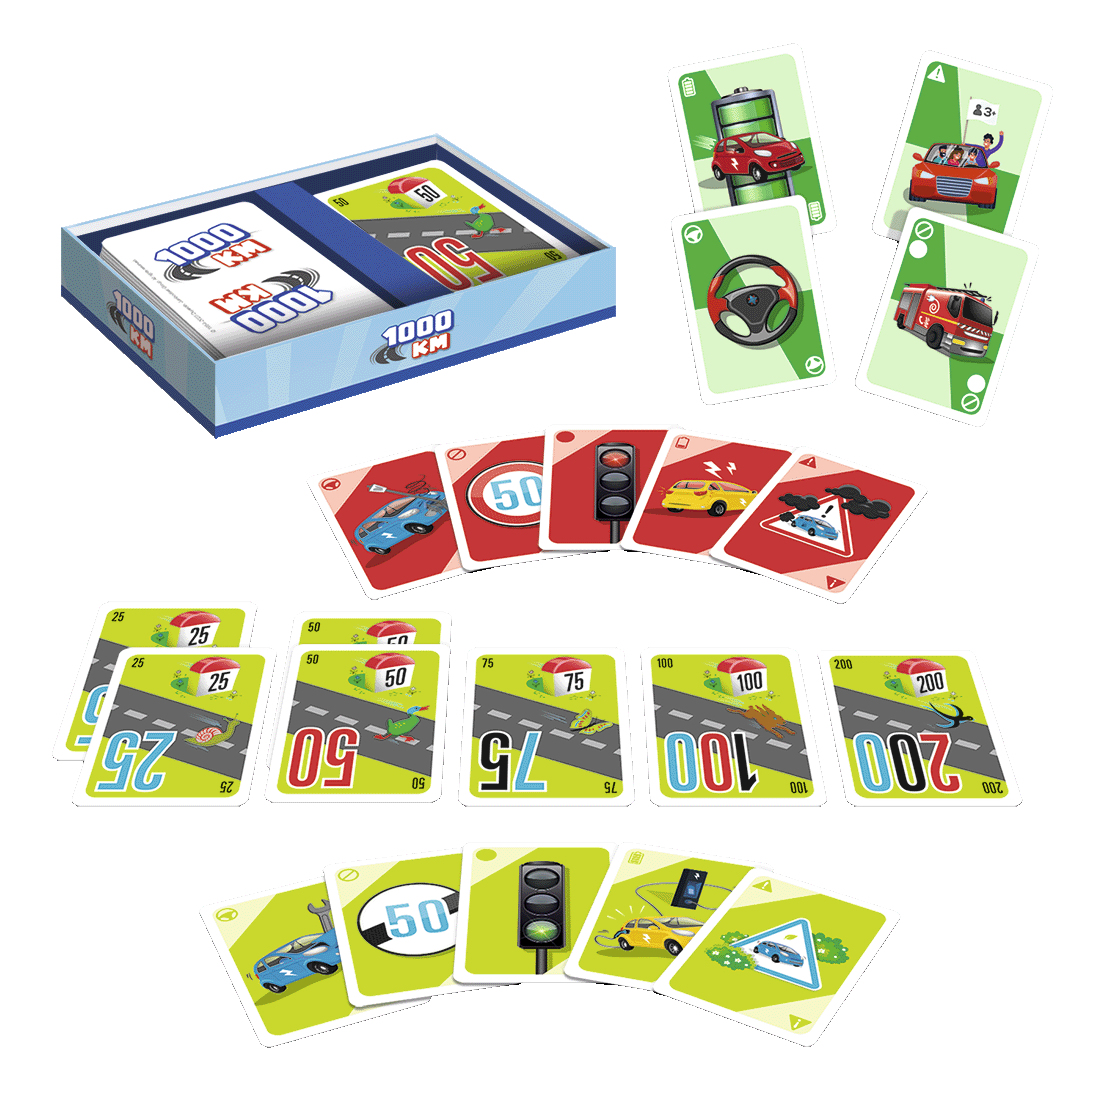 JUMBO 1110100012 1000KM Mehrfarbig Familienspiel Kartenspiel